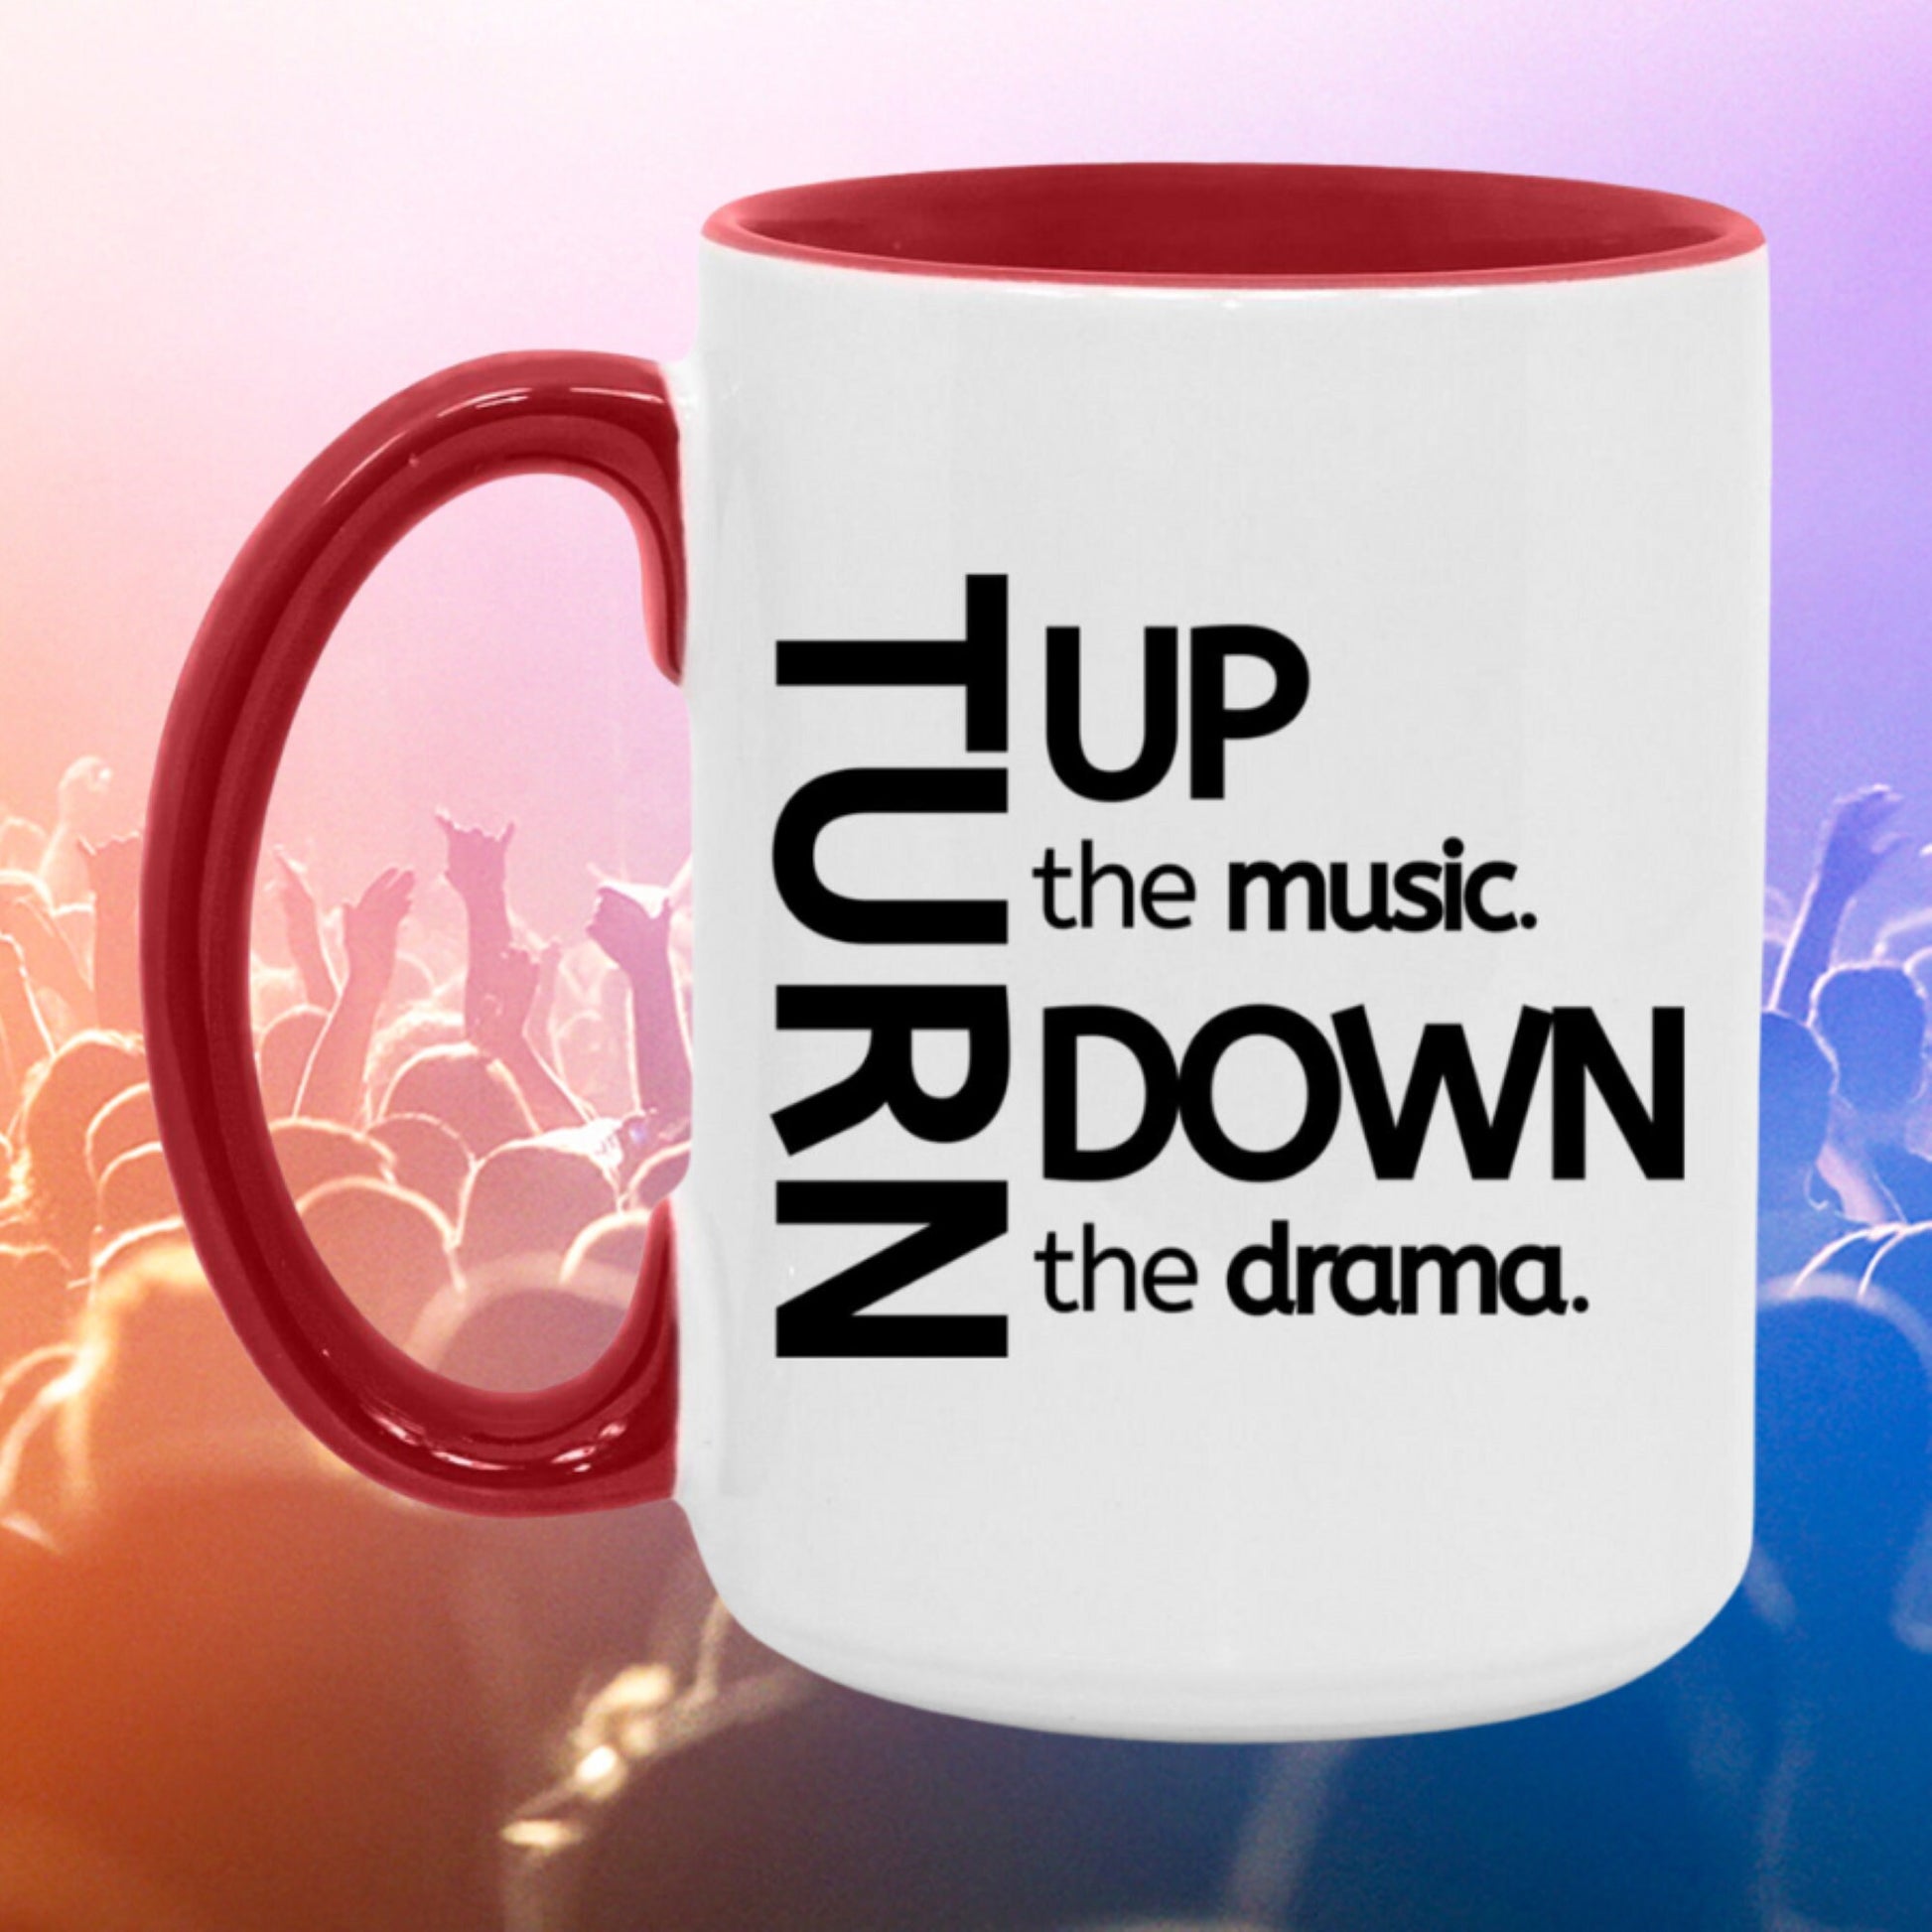 Turn Up The Music. Turn Down The Drama. Mug